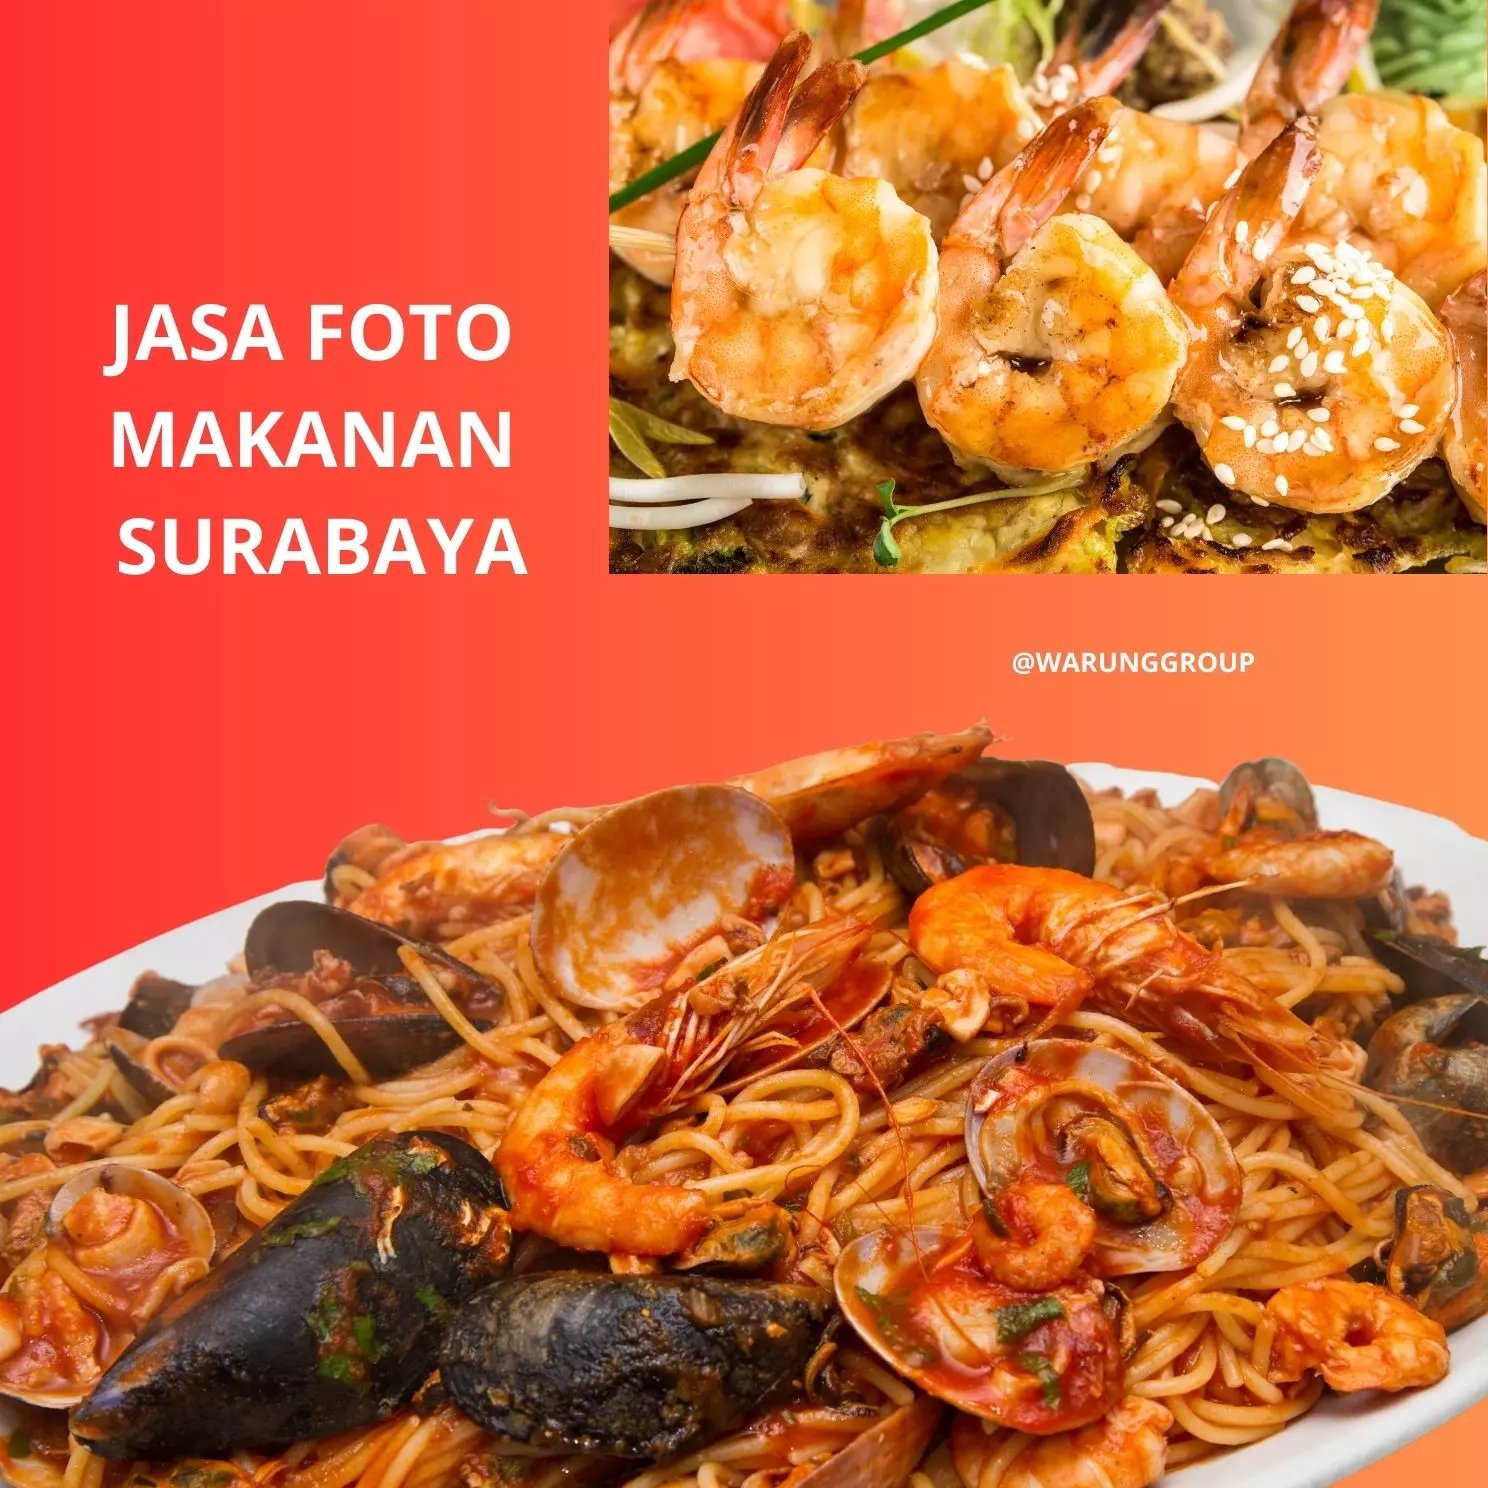 Pengertian Jasa Foto Makanan Surabaya